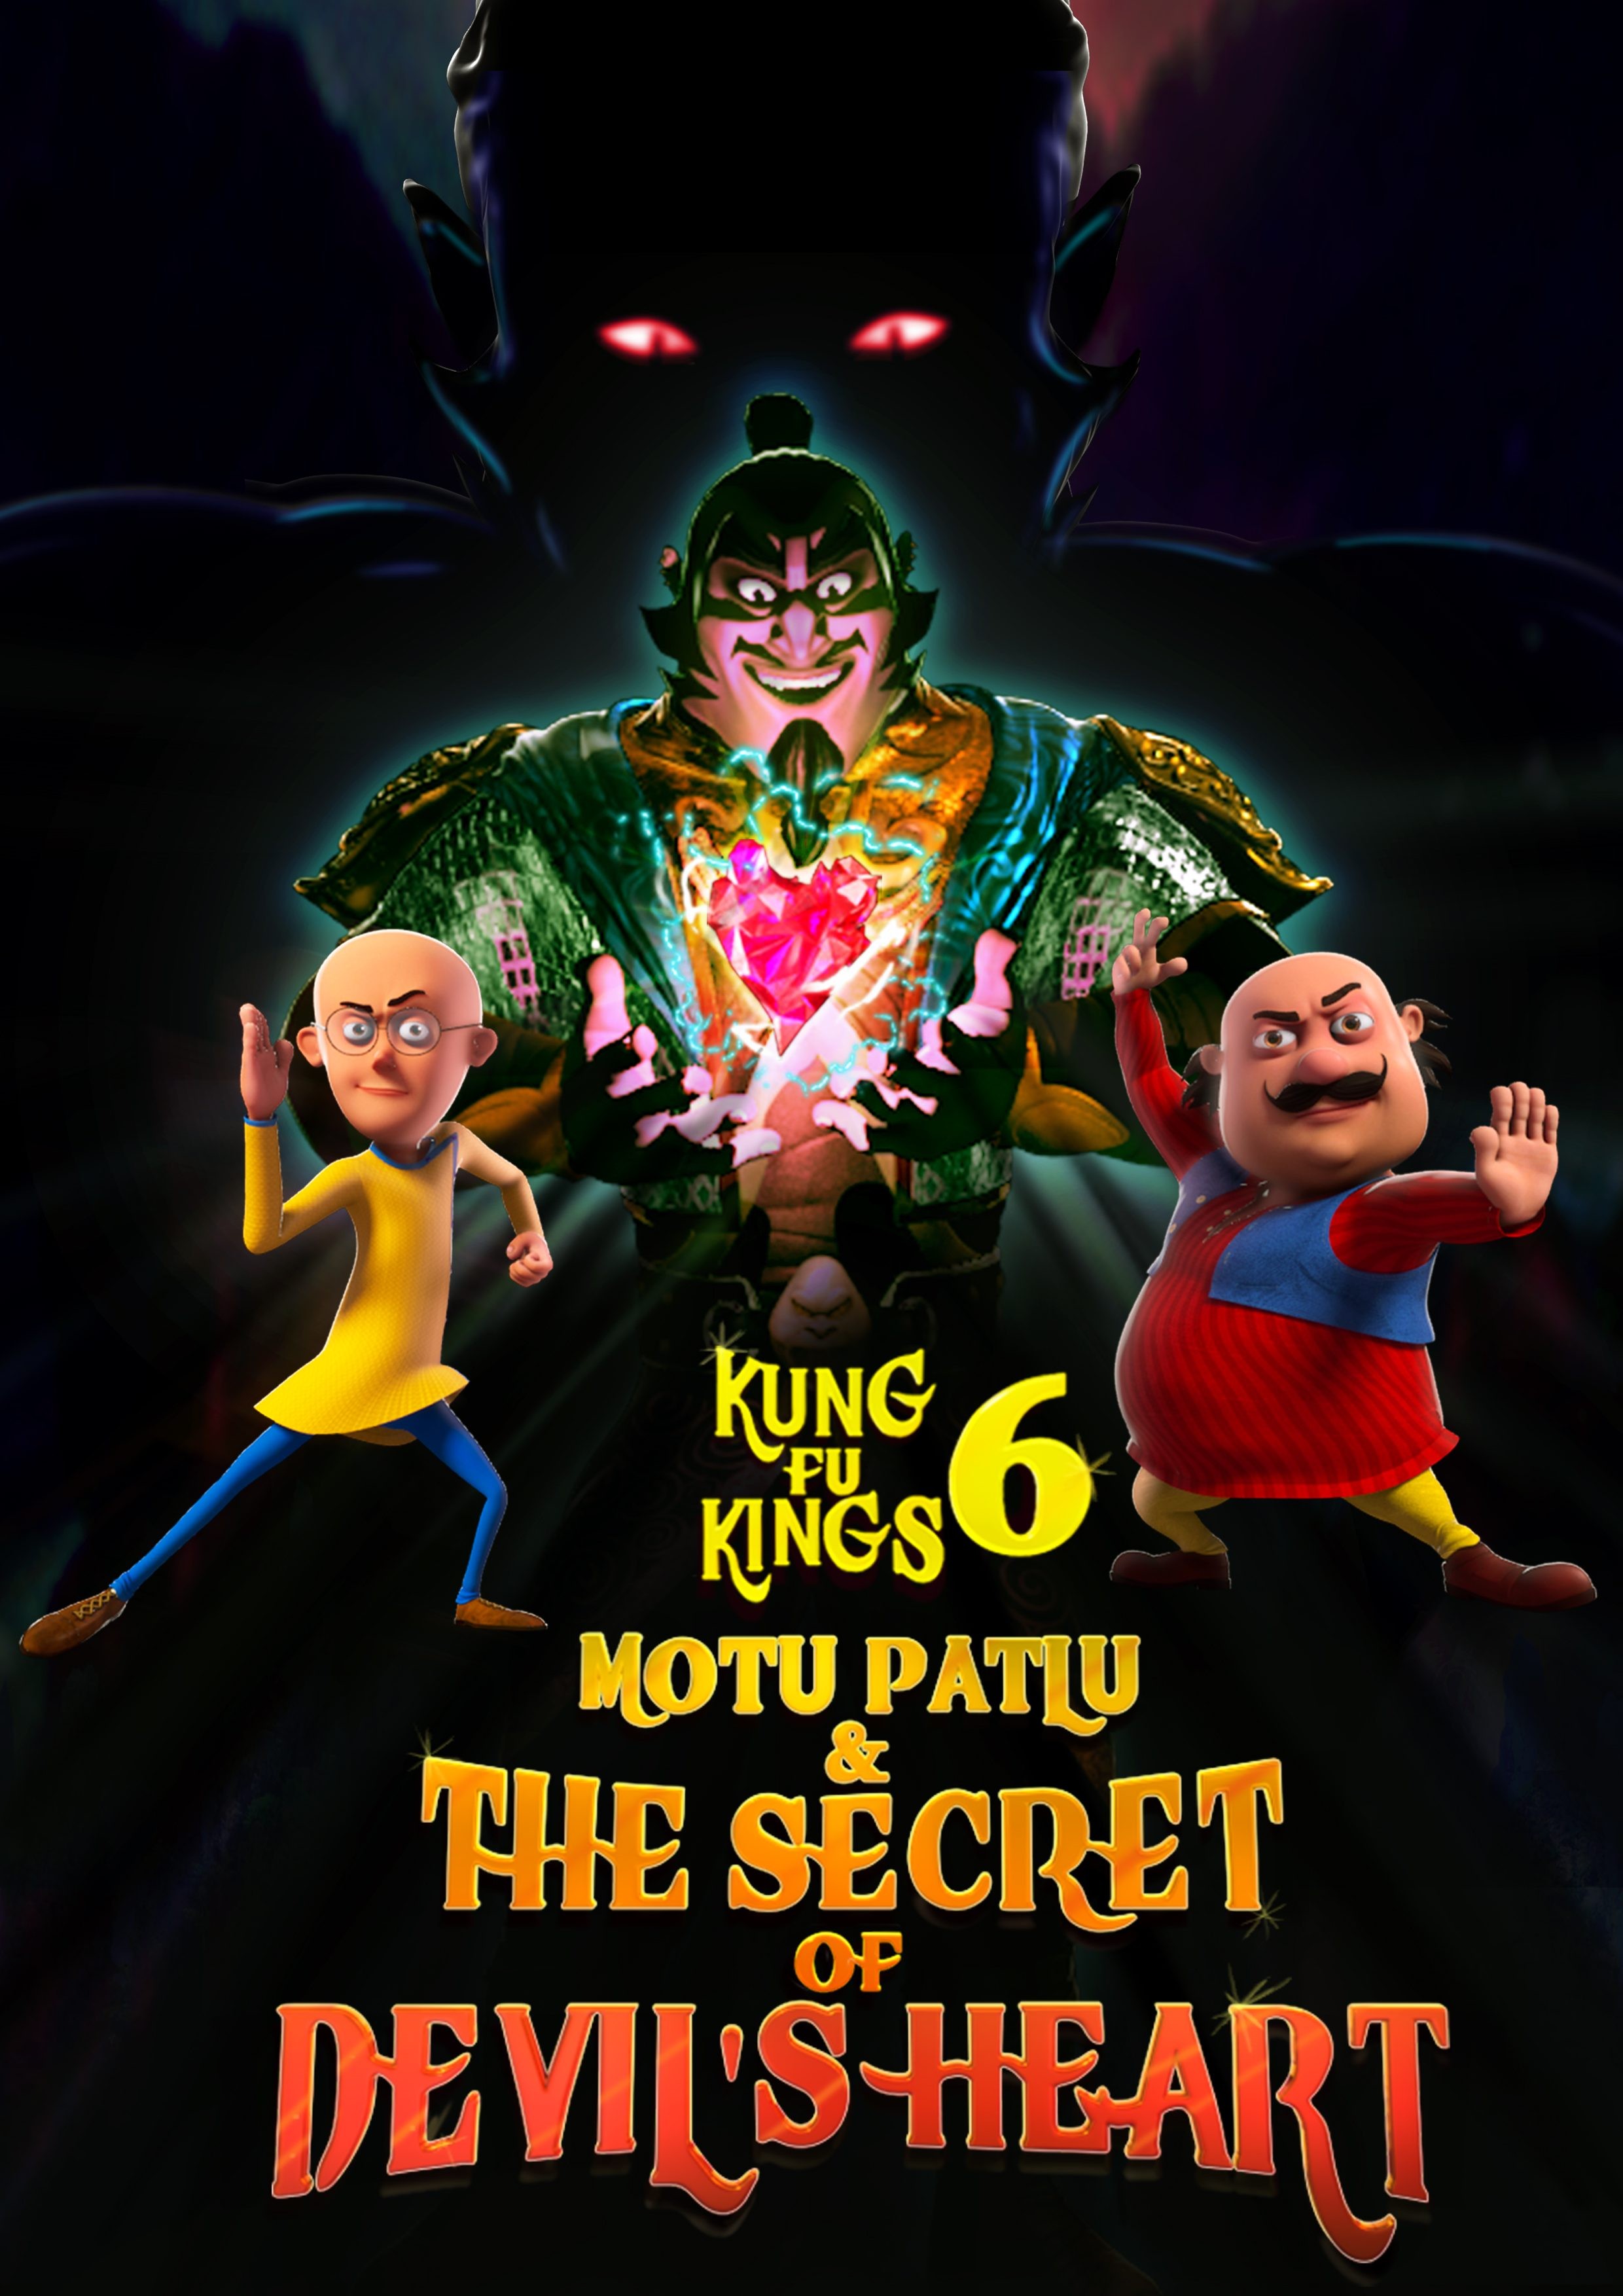 Motu Patlu and the Secret of Devils Heart 2022 Hindi ORG Multi Audio 480p HDRip 400MB Download